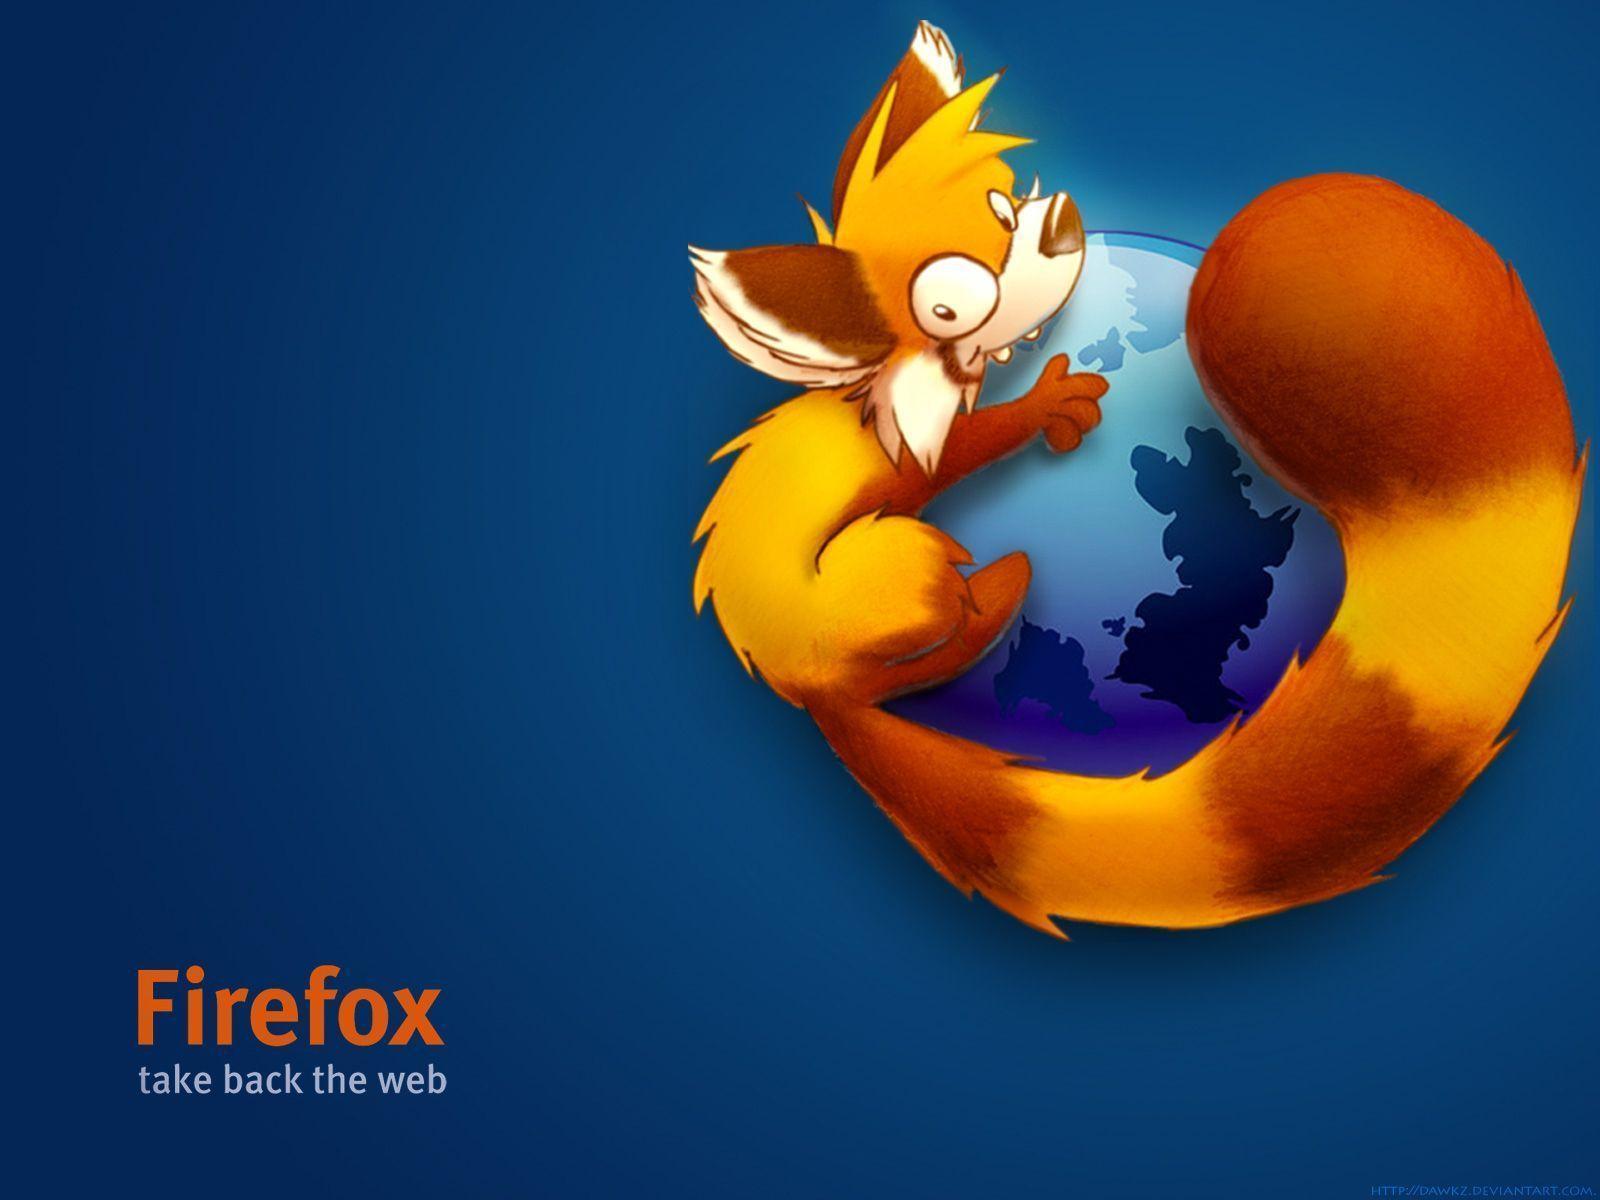 Mozilla Firefox Wallpaper. PicsWallpaper